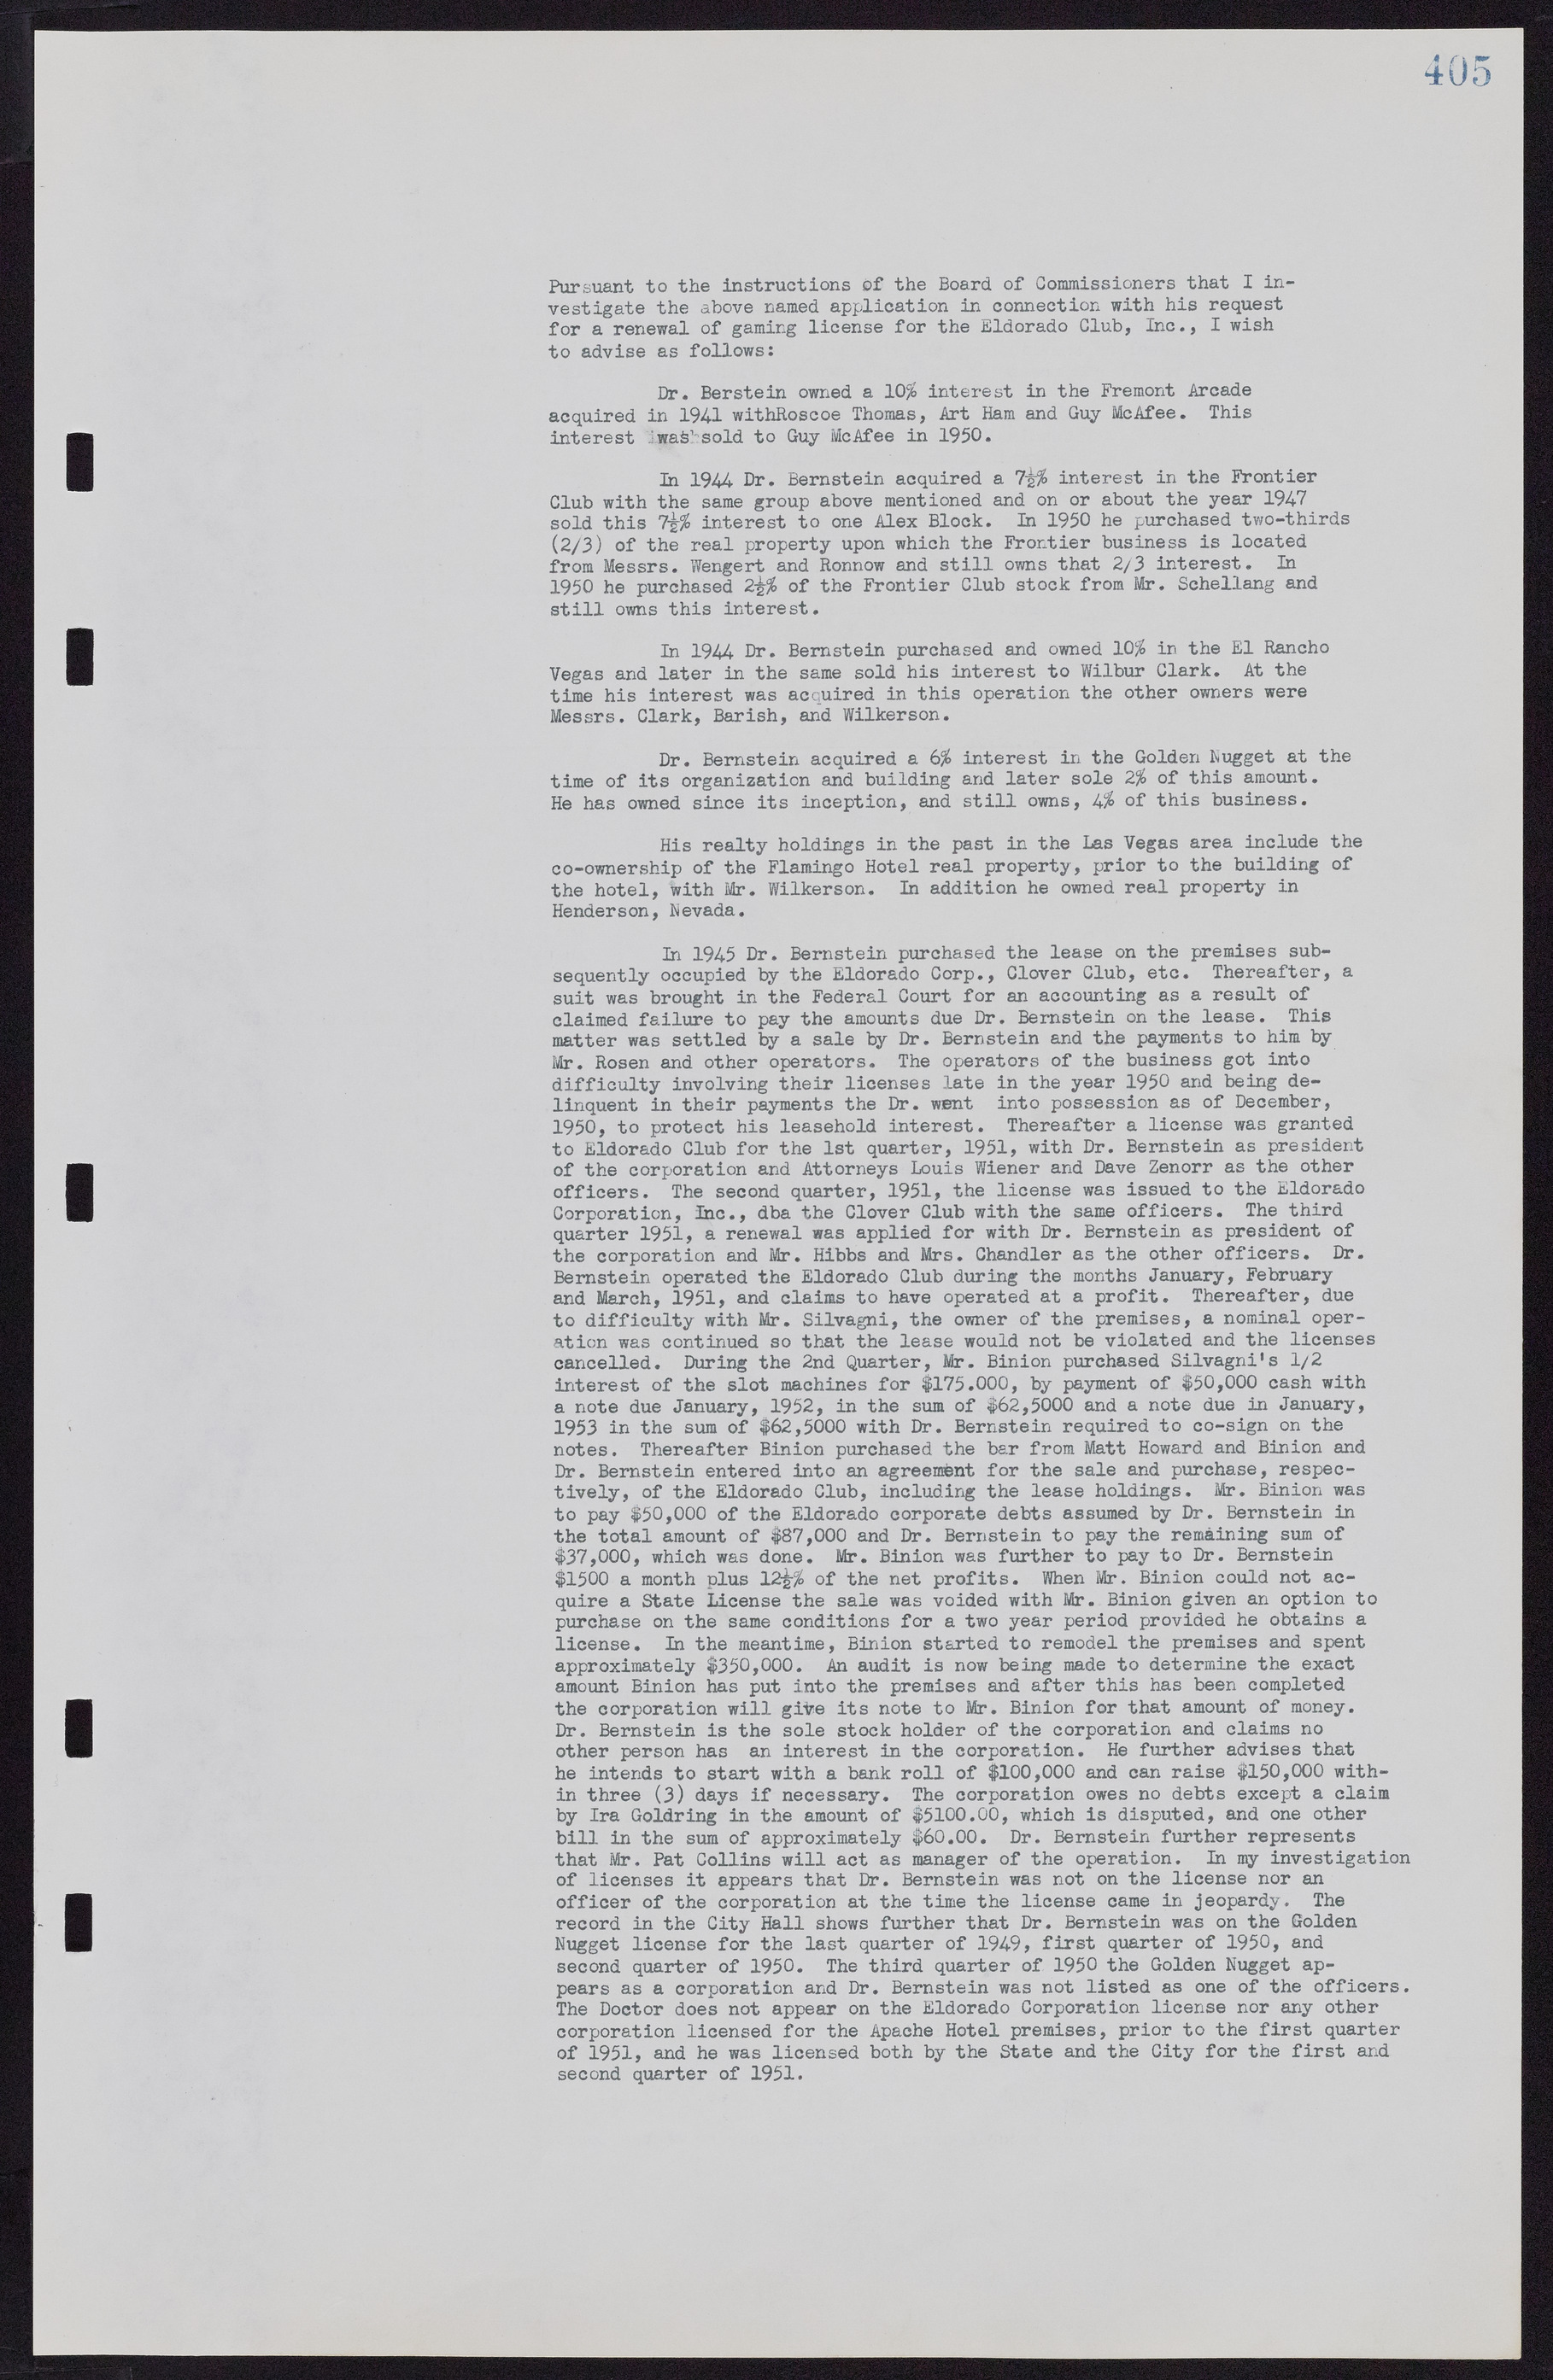 Las Vegas City Commission Minutes, November 7, 1949 to May 21, 1952, lvc000007-421